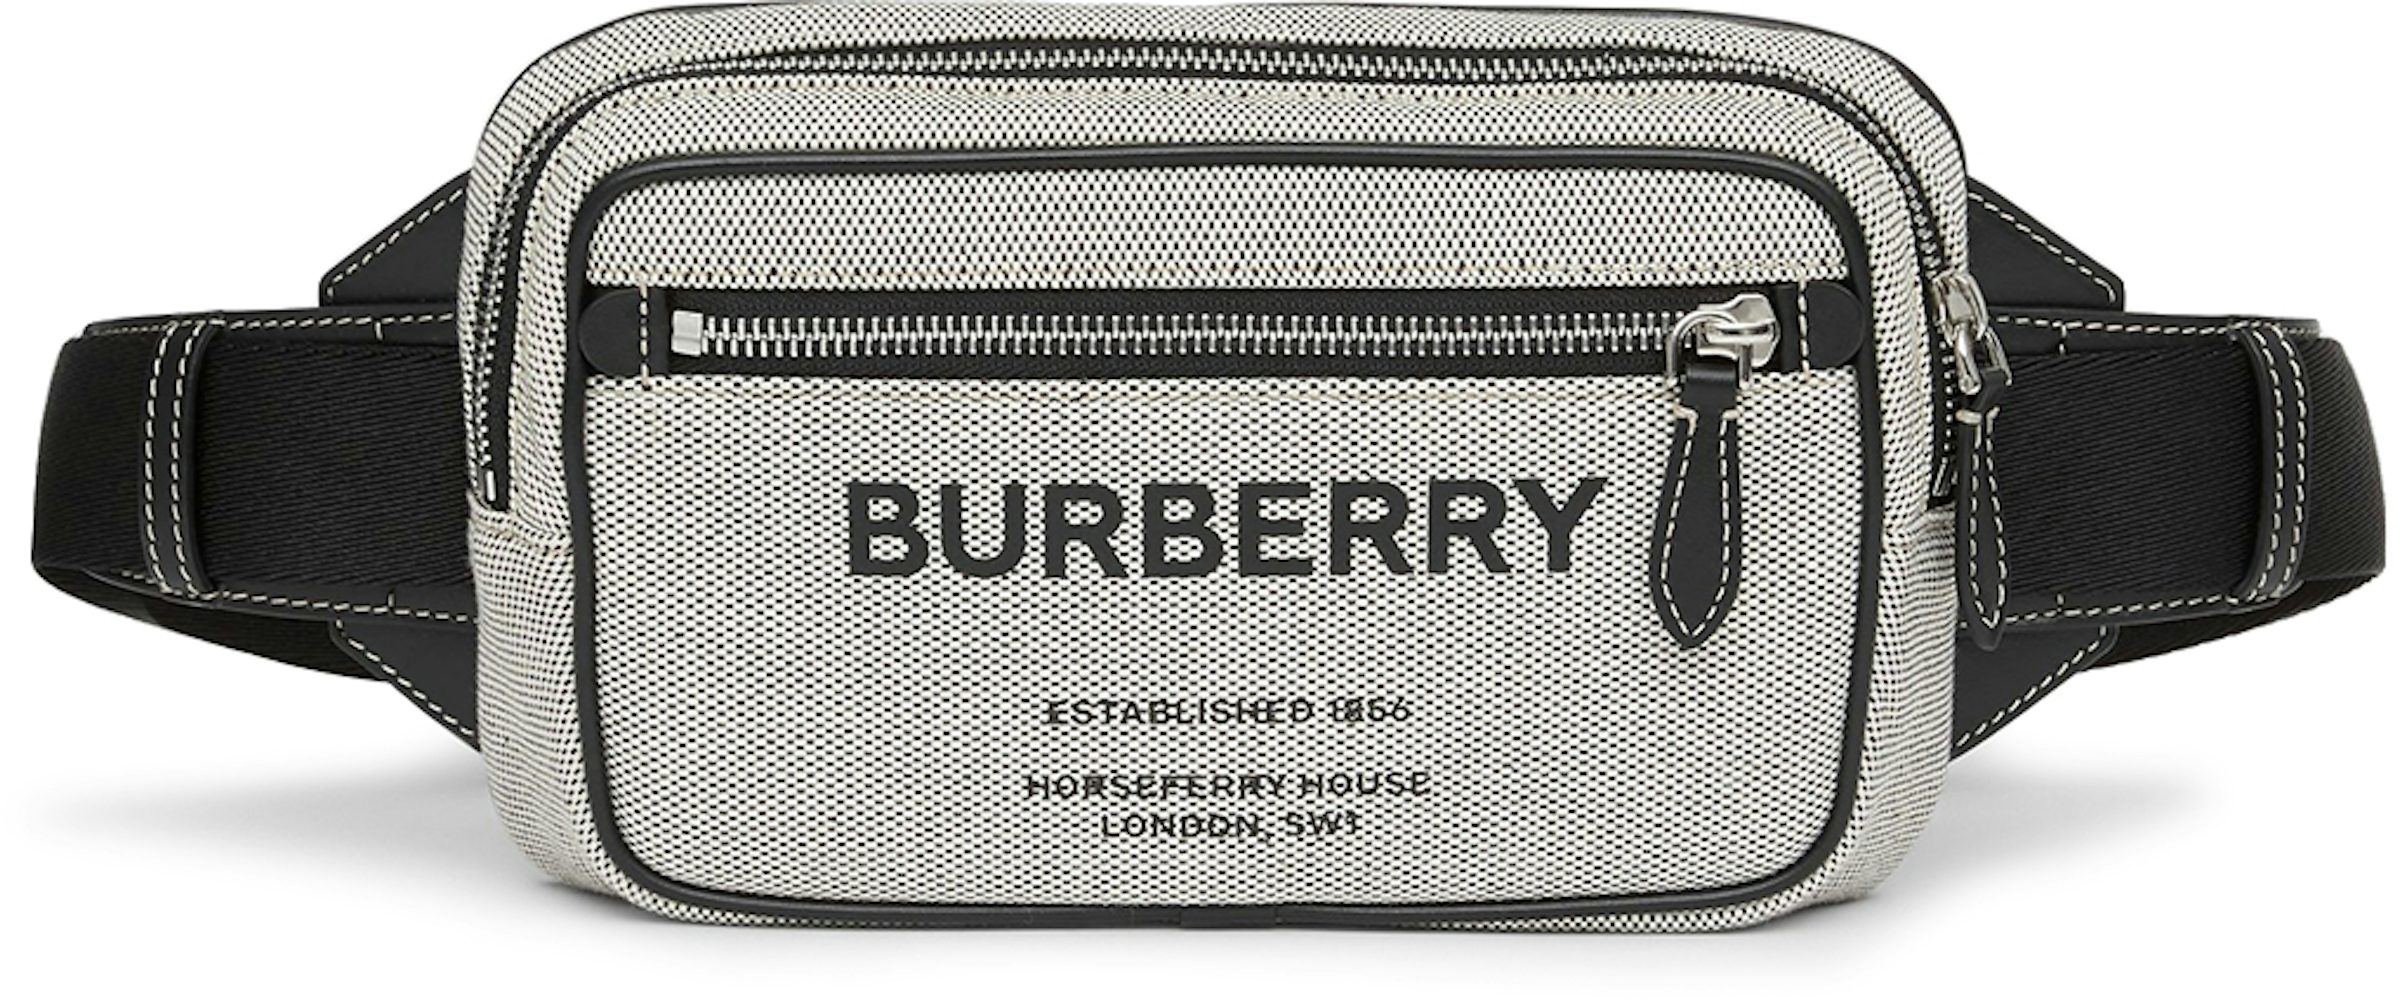 Burberry Horseferry Print Cotton Canvas Bum Bag Grey/Black